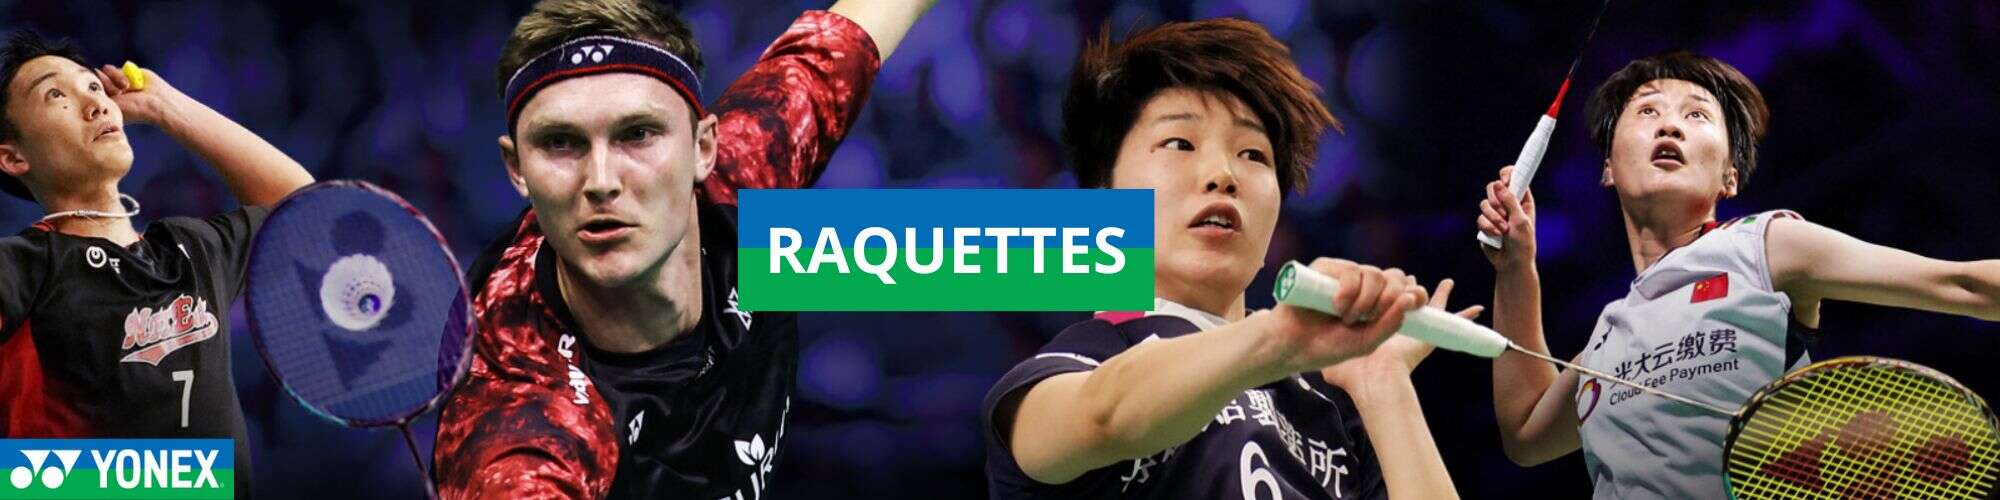 Raquette badminton Yonex